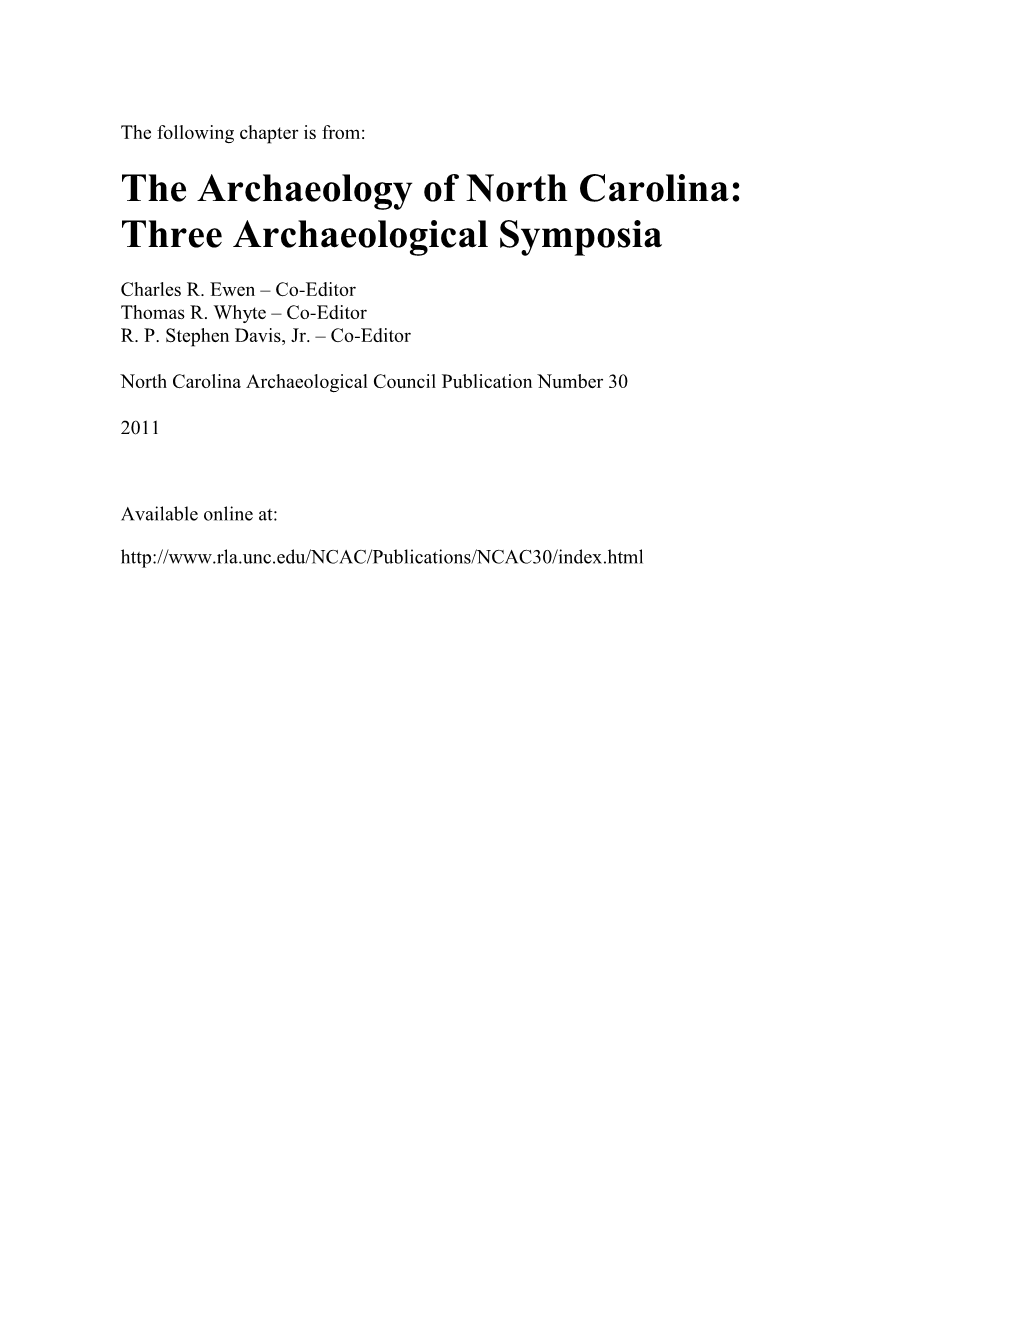 The Archaeology of North Carolina: Three Archaeological Symposia